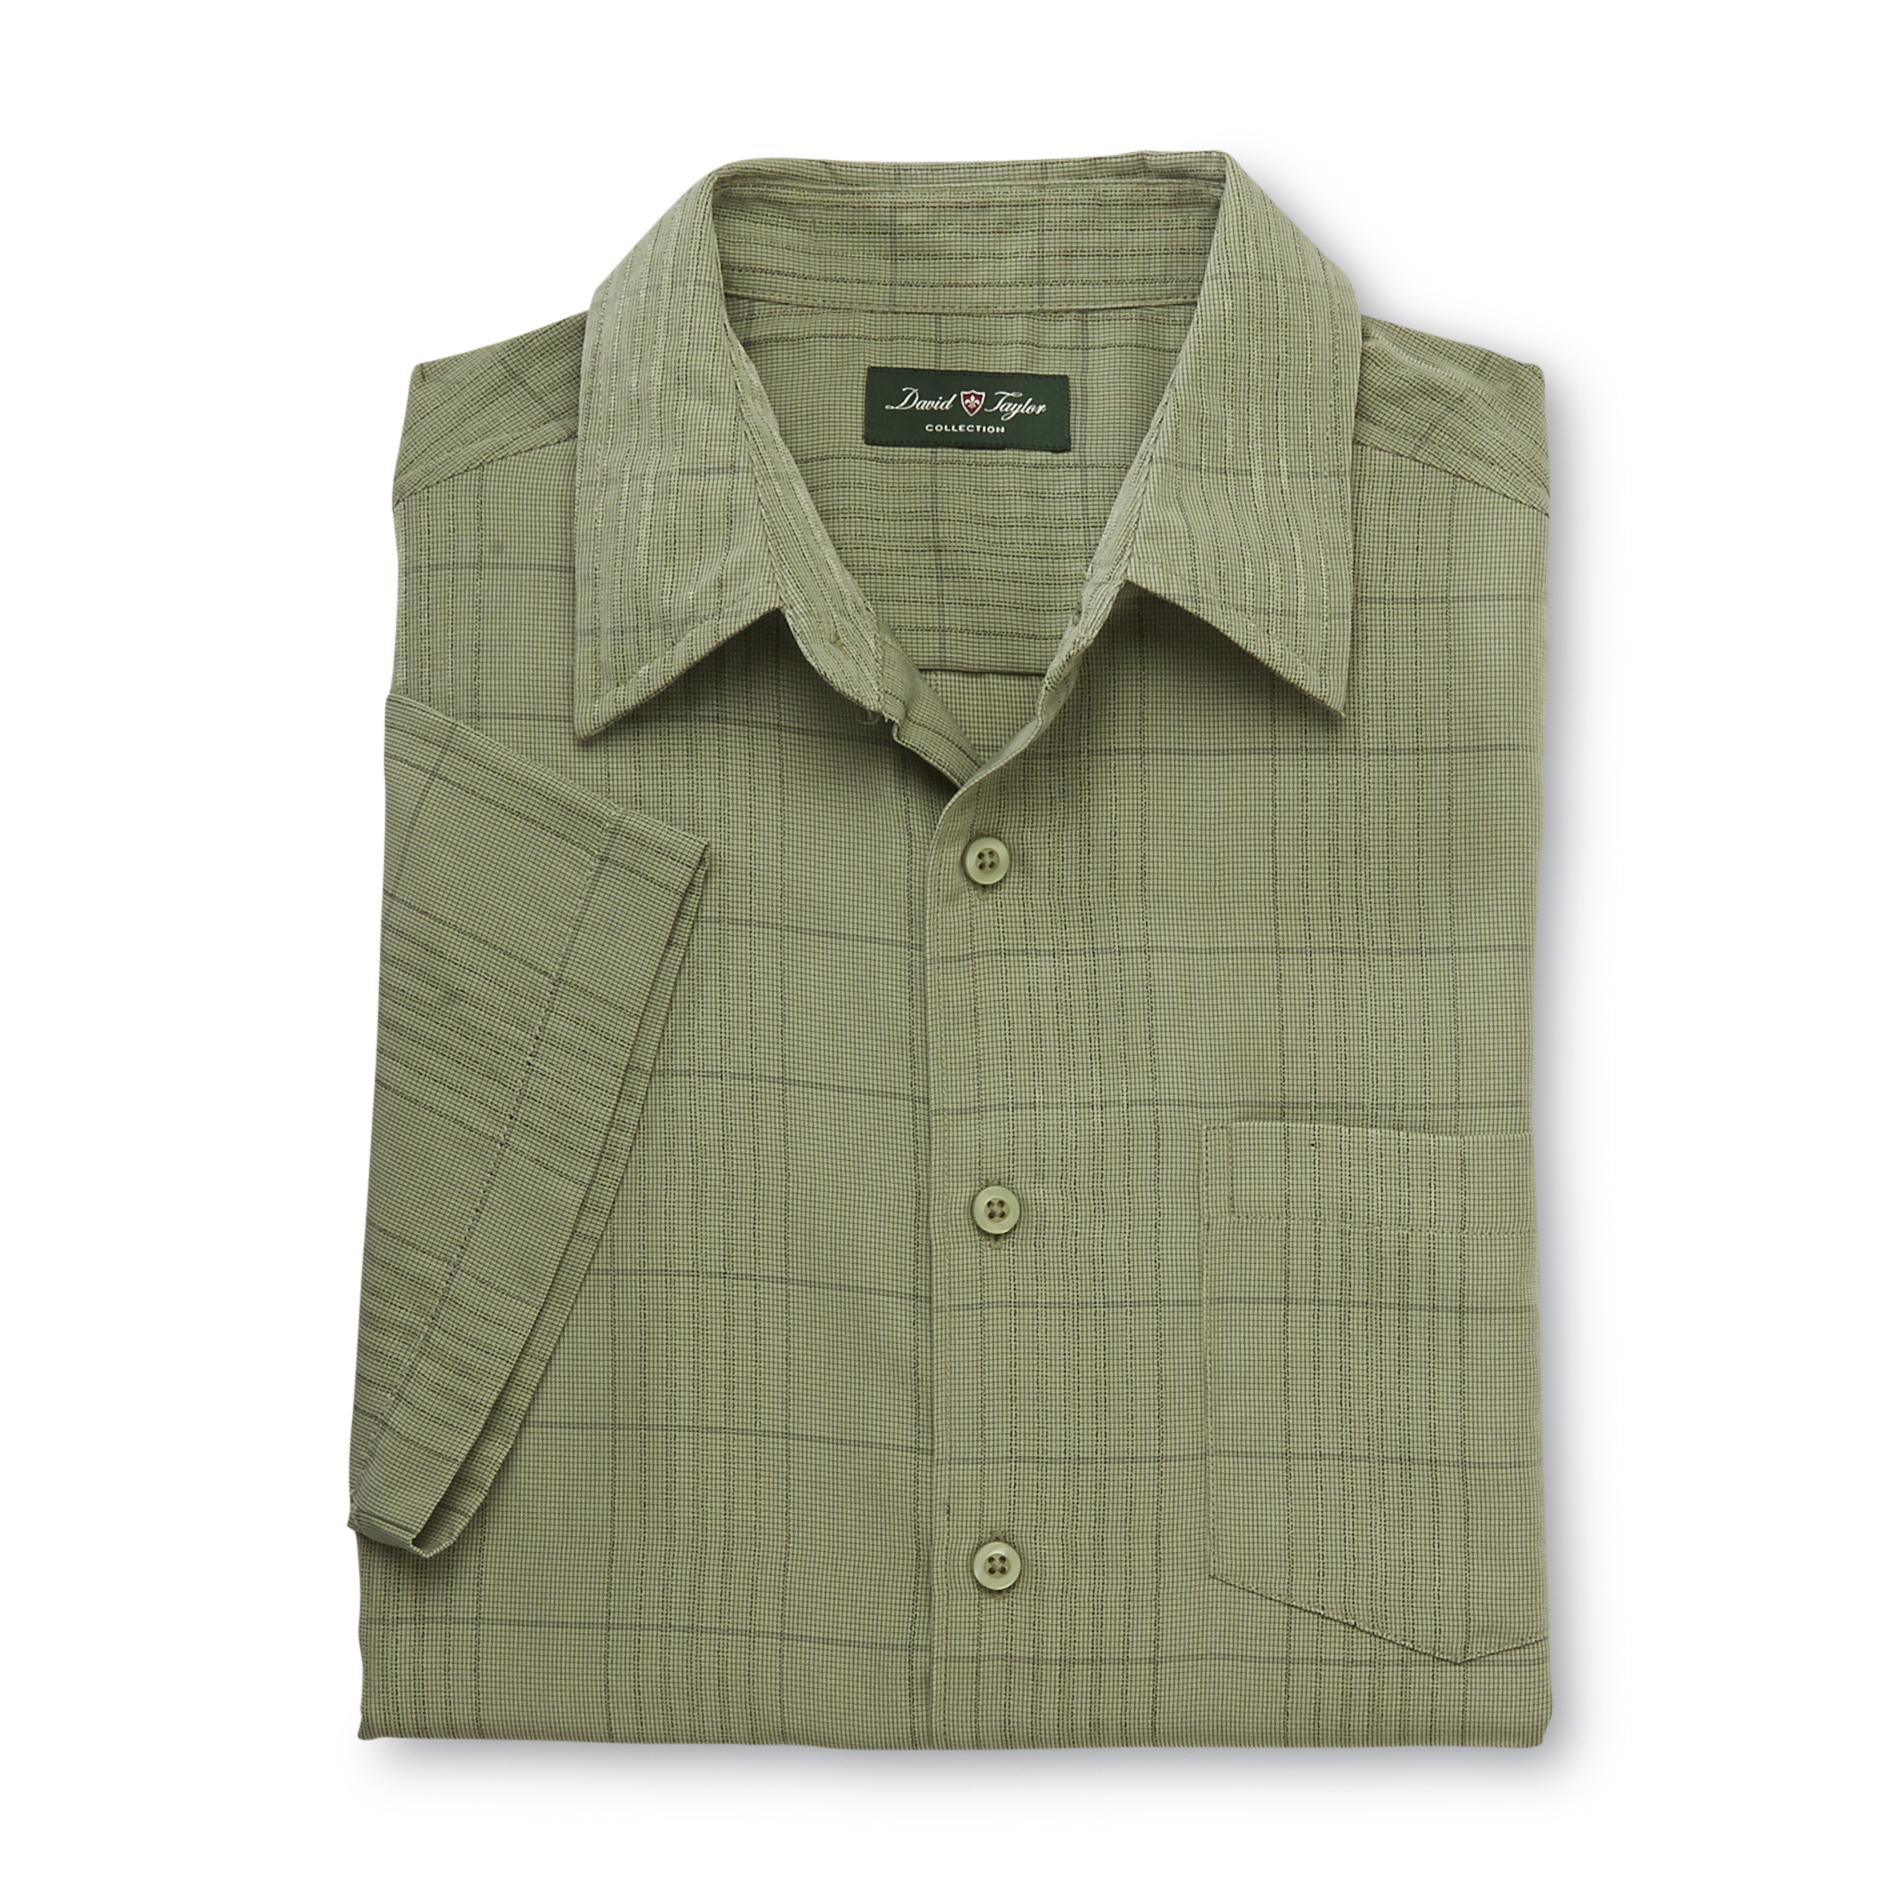 David Taylor Collection Men's Short-Sleeve Shirt - Plaid